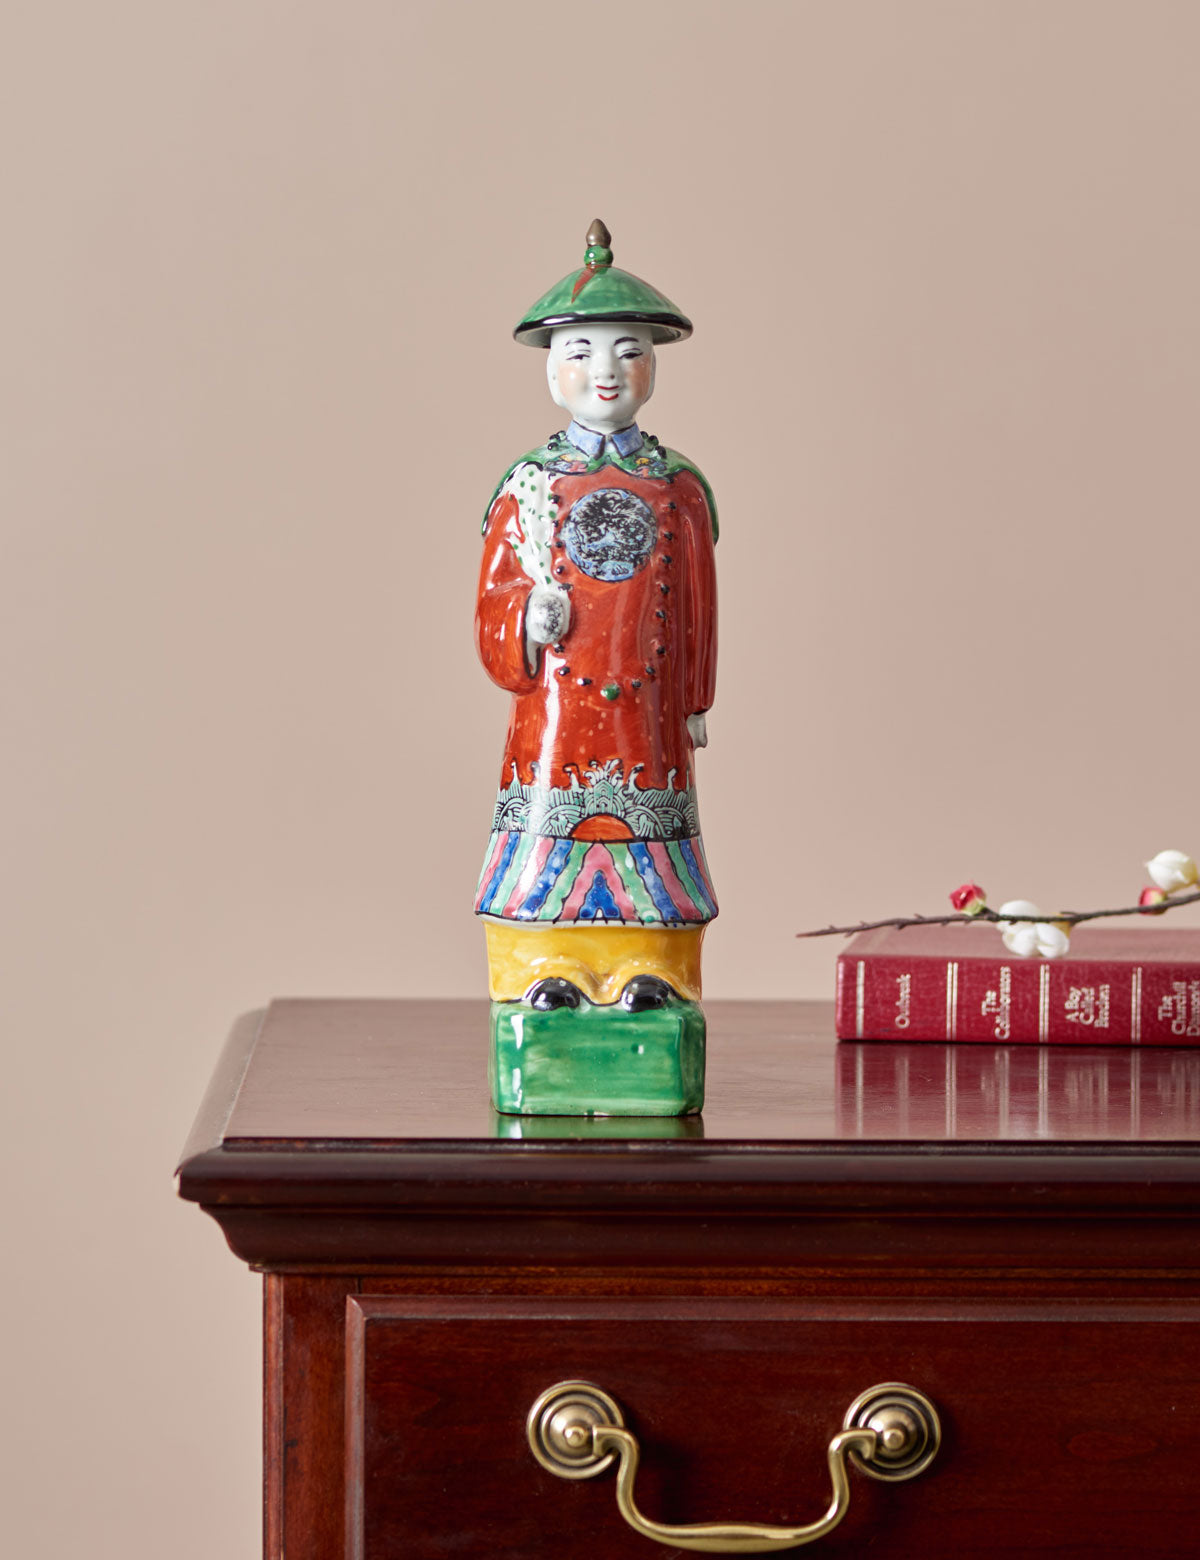 'The Qing Emperors' Porcelain Sculptures - Set of 3